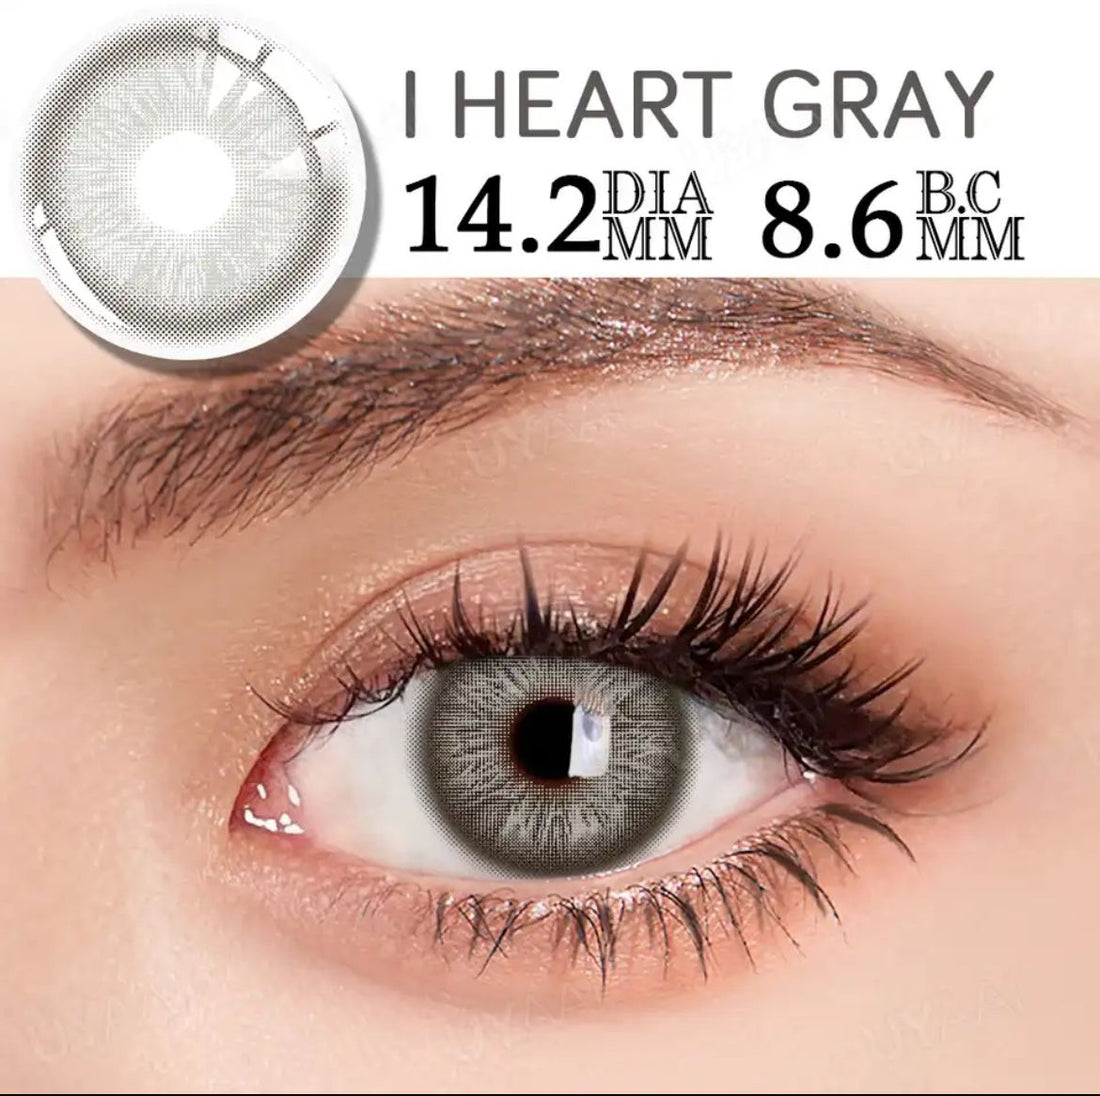 I heart grey lenses